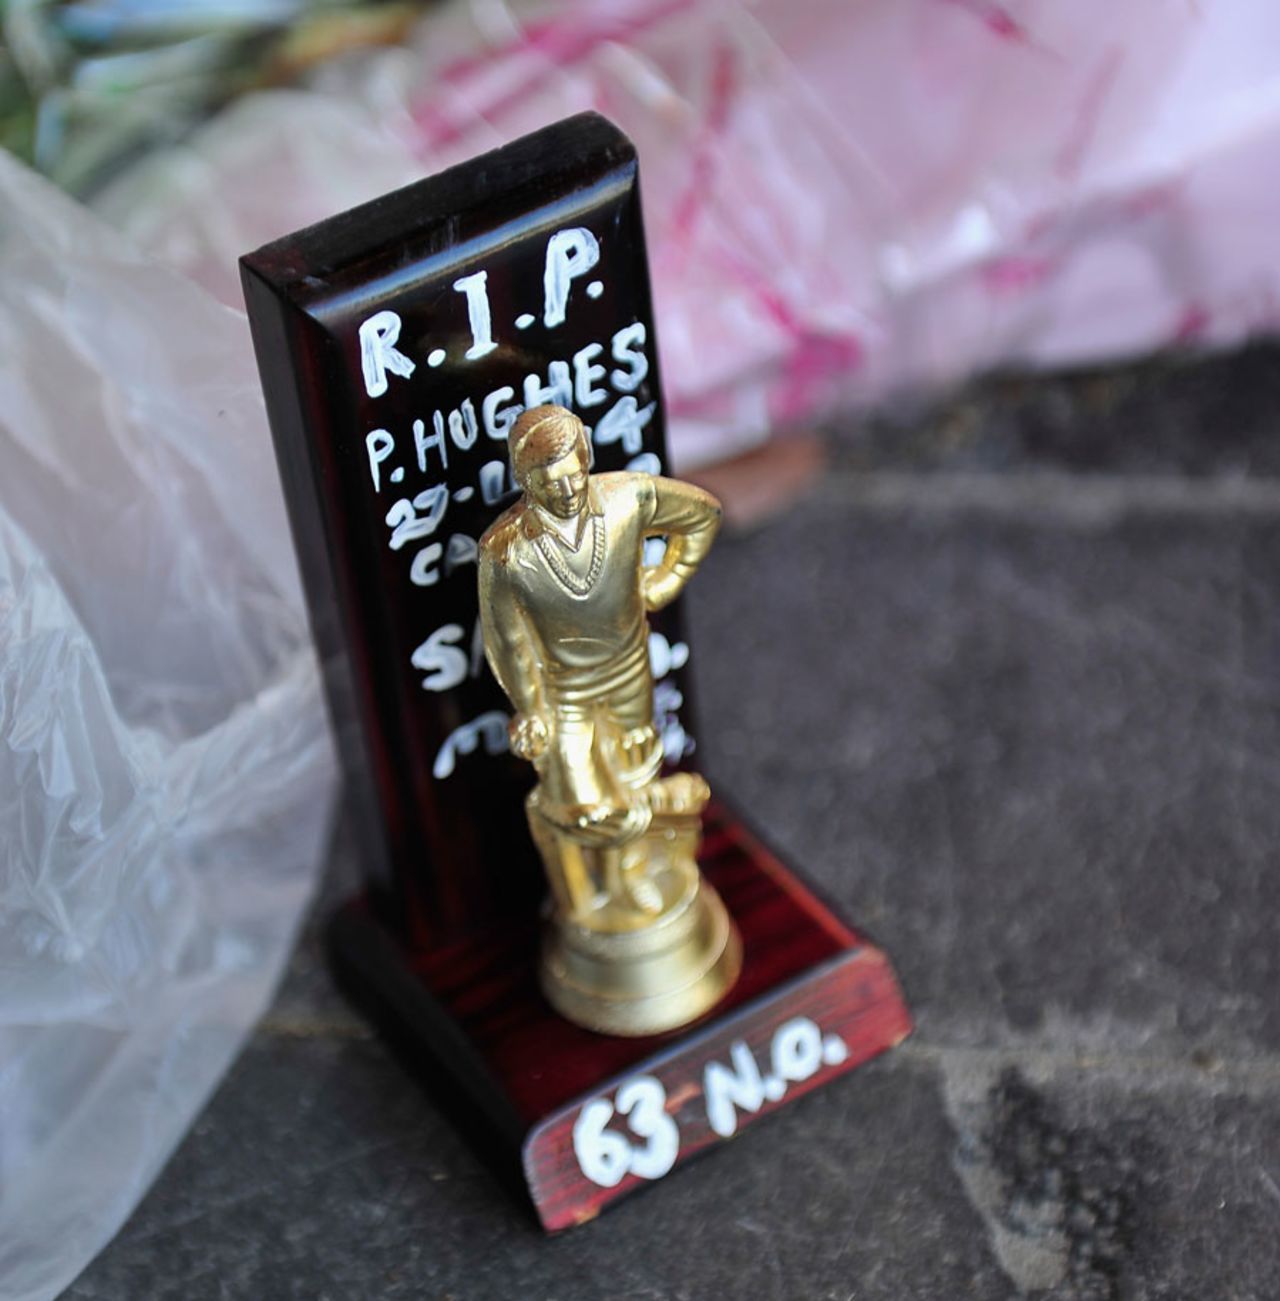 Memorabilia at the Adelaide Oval before Phillip Hughes funeral service in Macksville, Adelaide, December 3, 2014